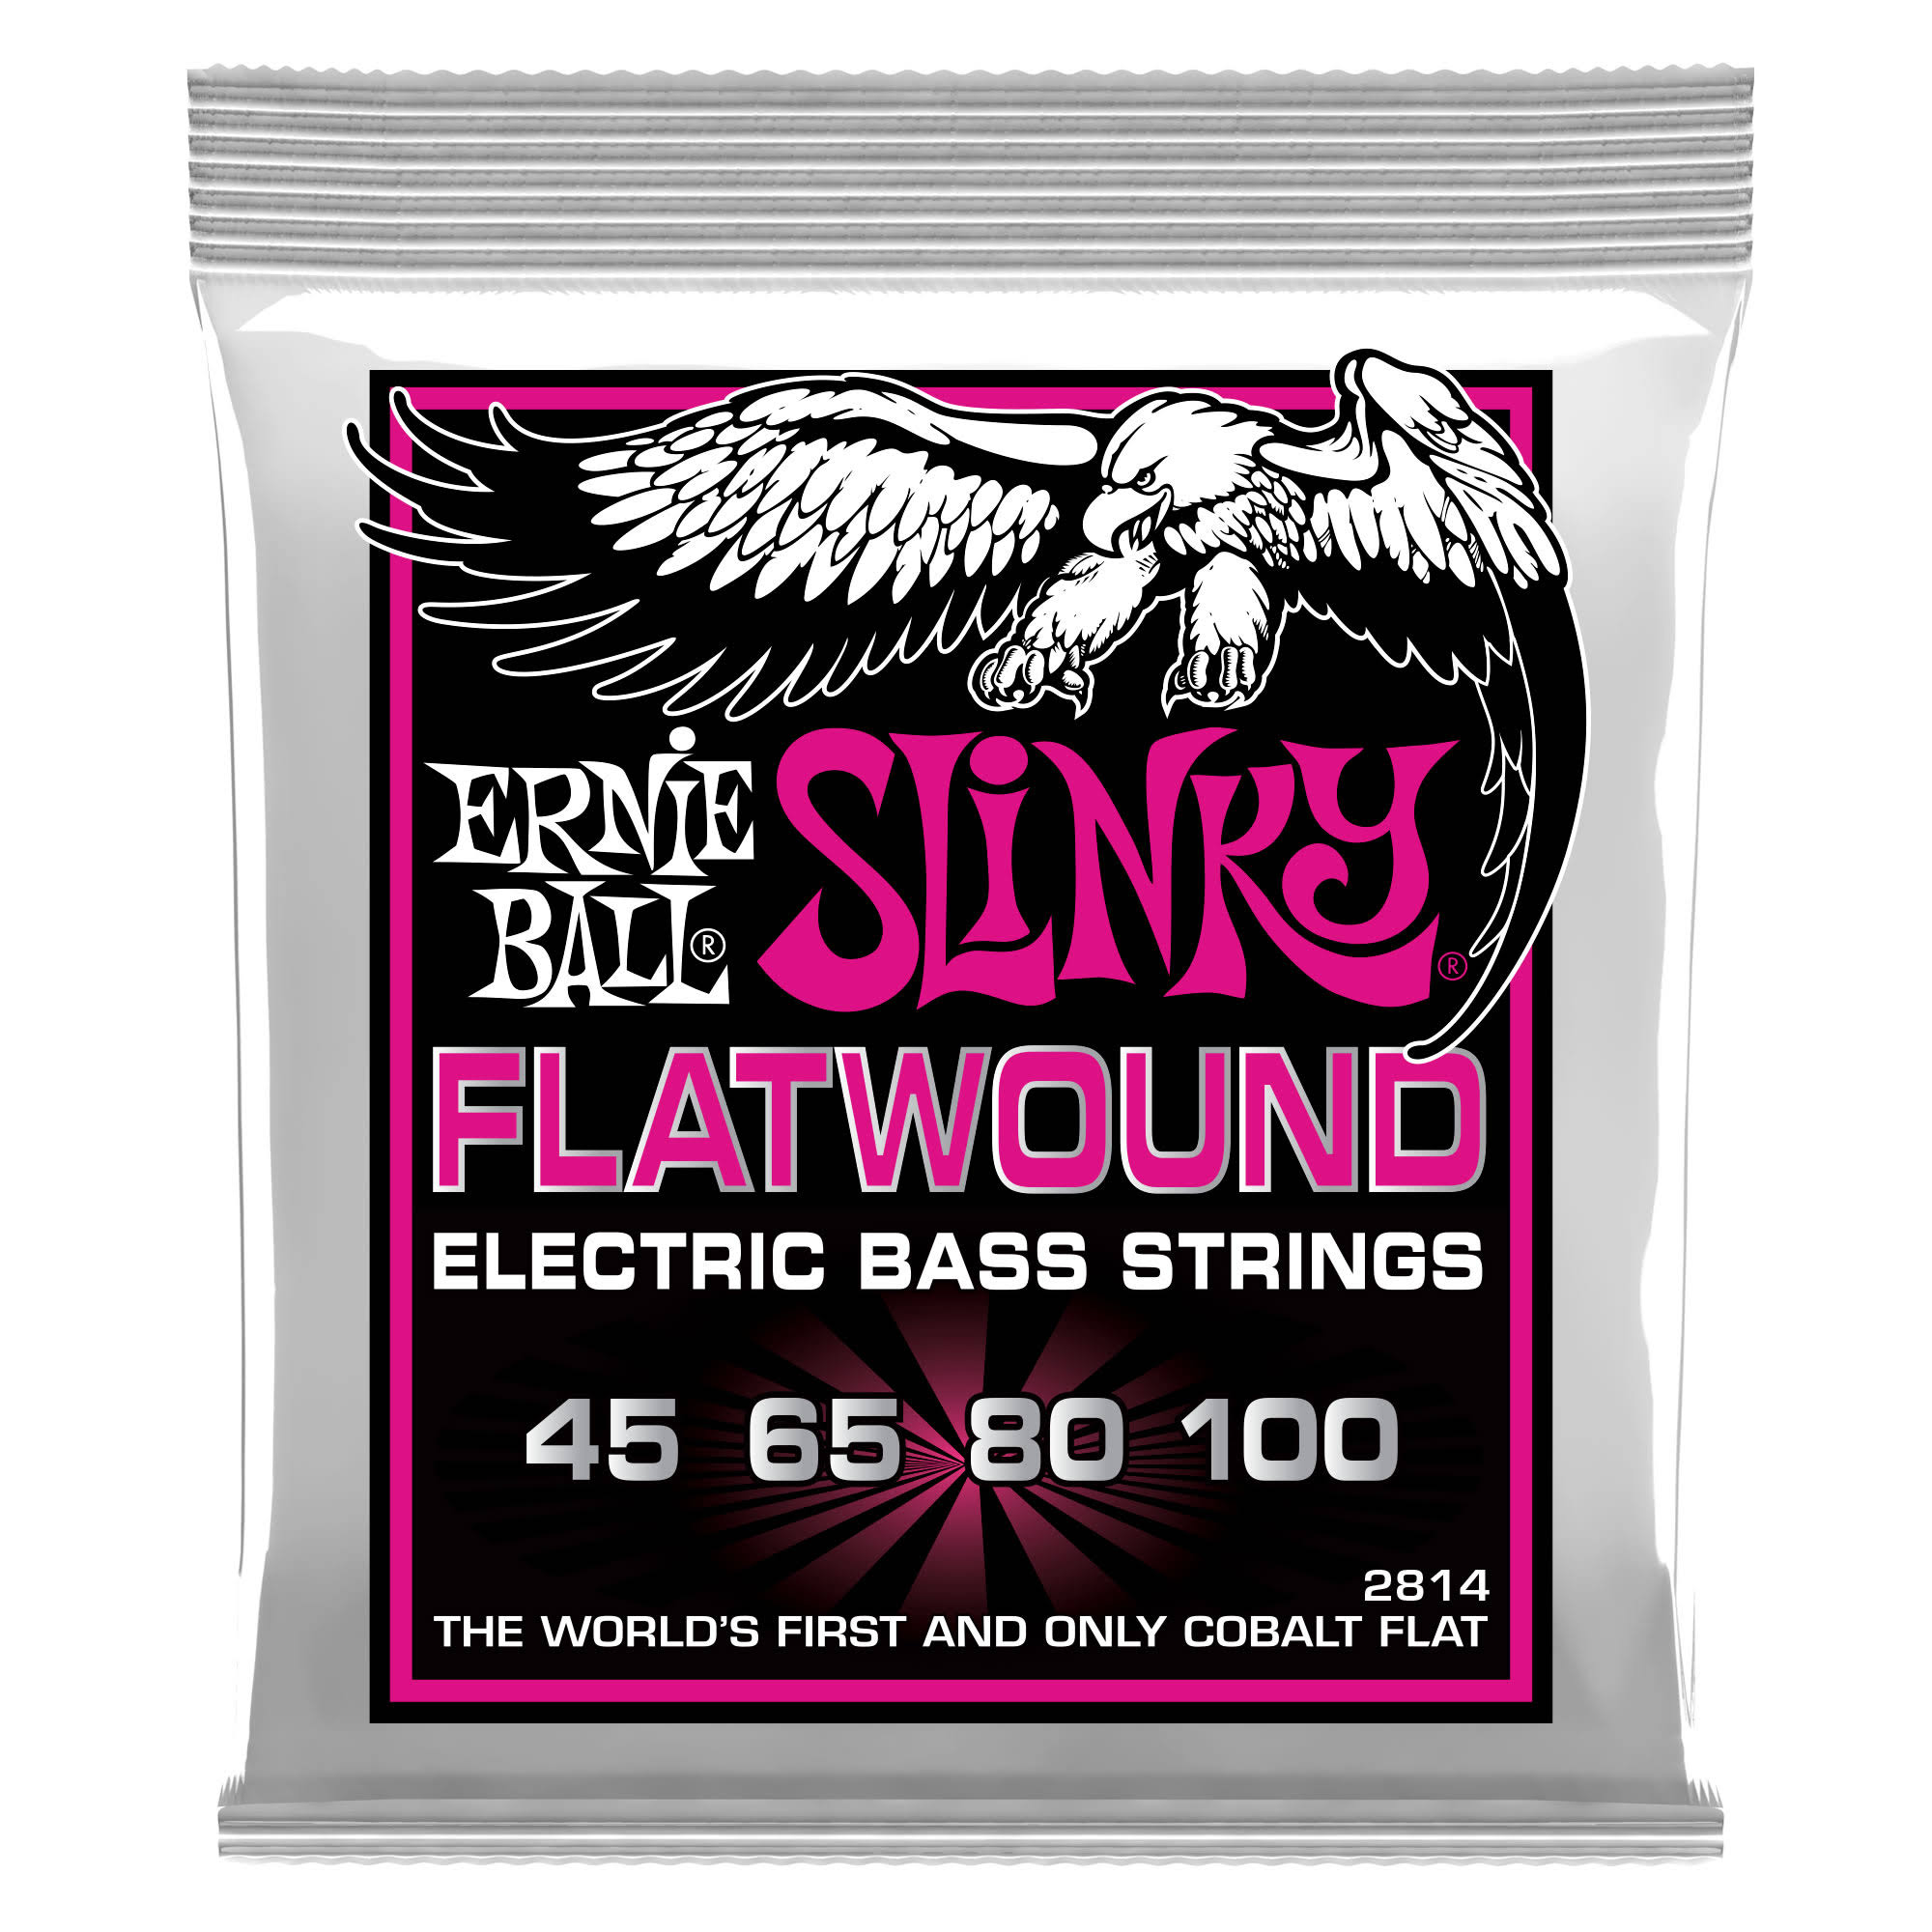 Ernie Ball 2814 Super Slinky Flatwound Electric Bass Guitar String - 4 String Set, 45-100